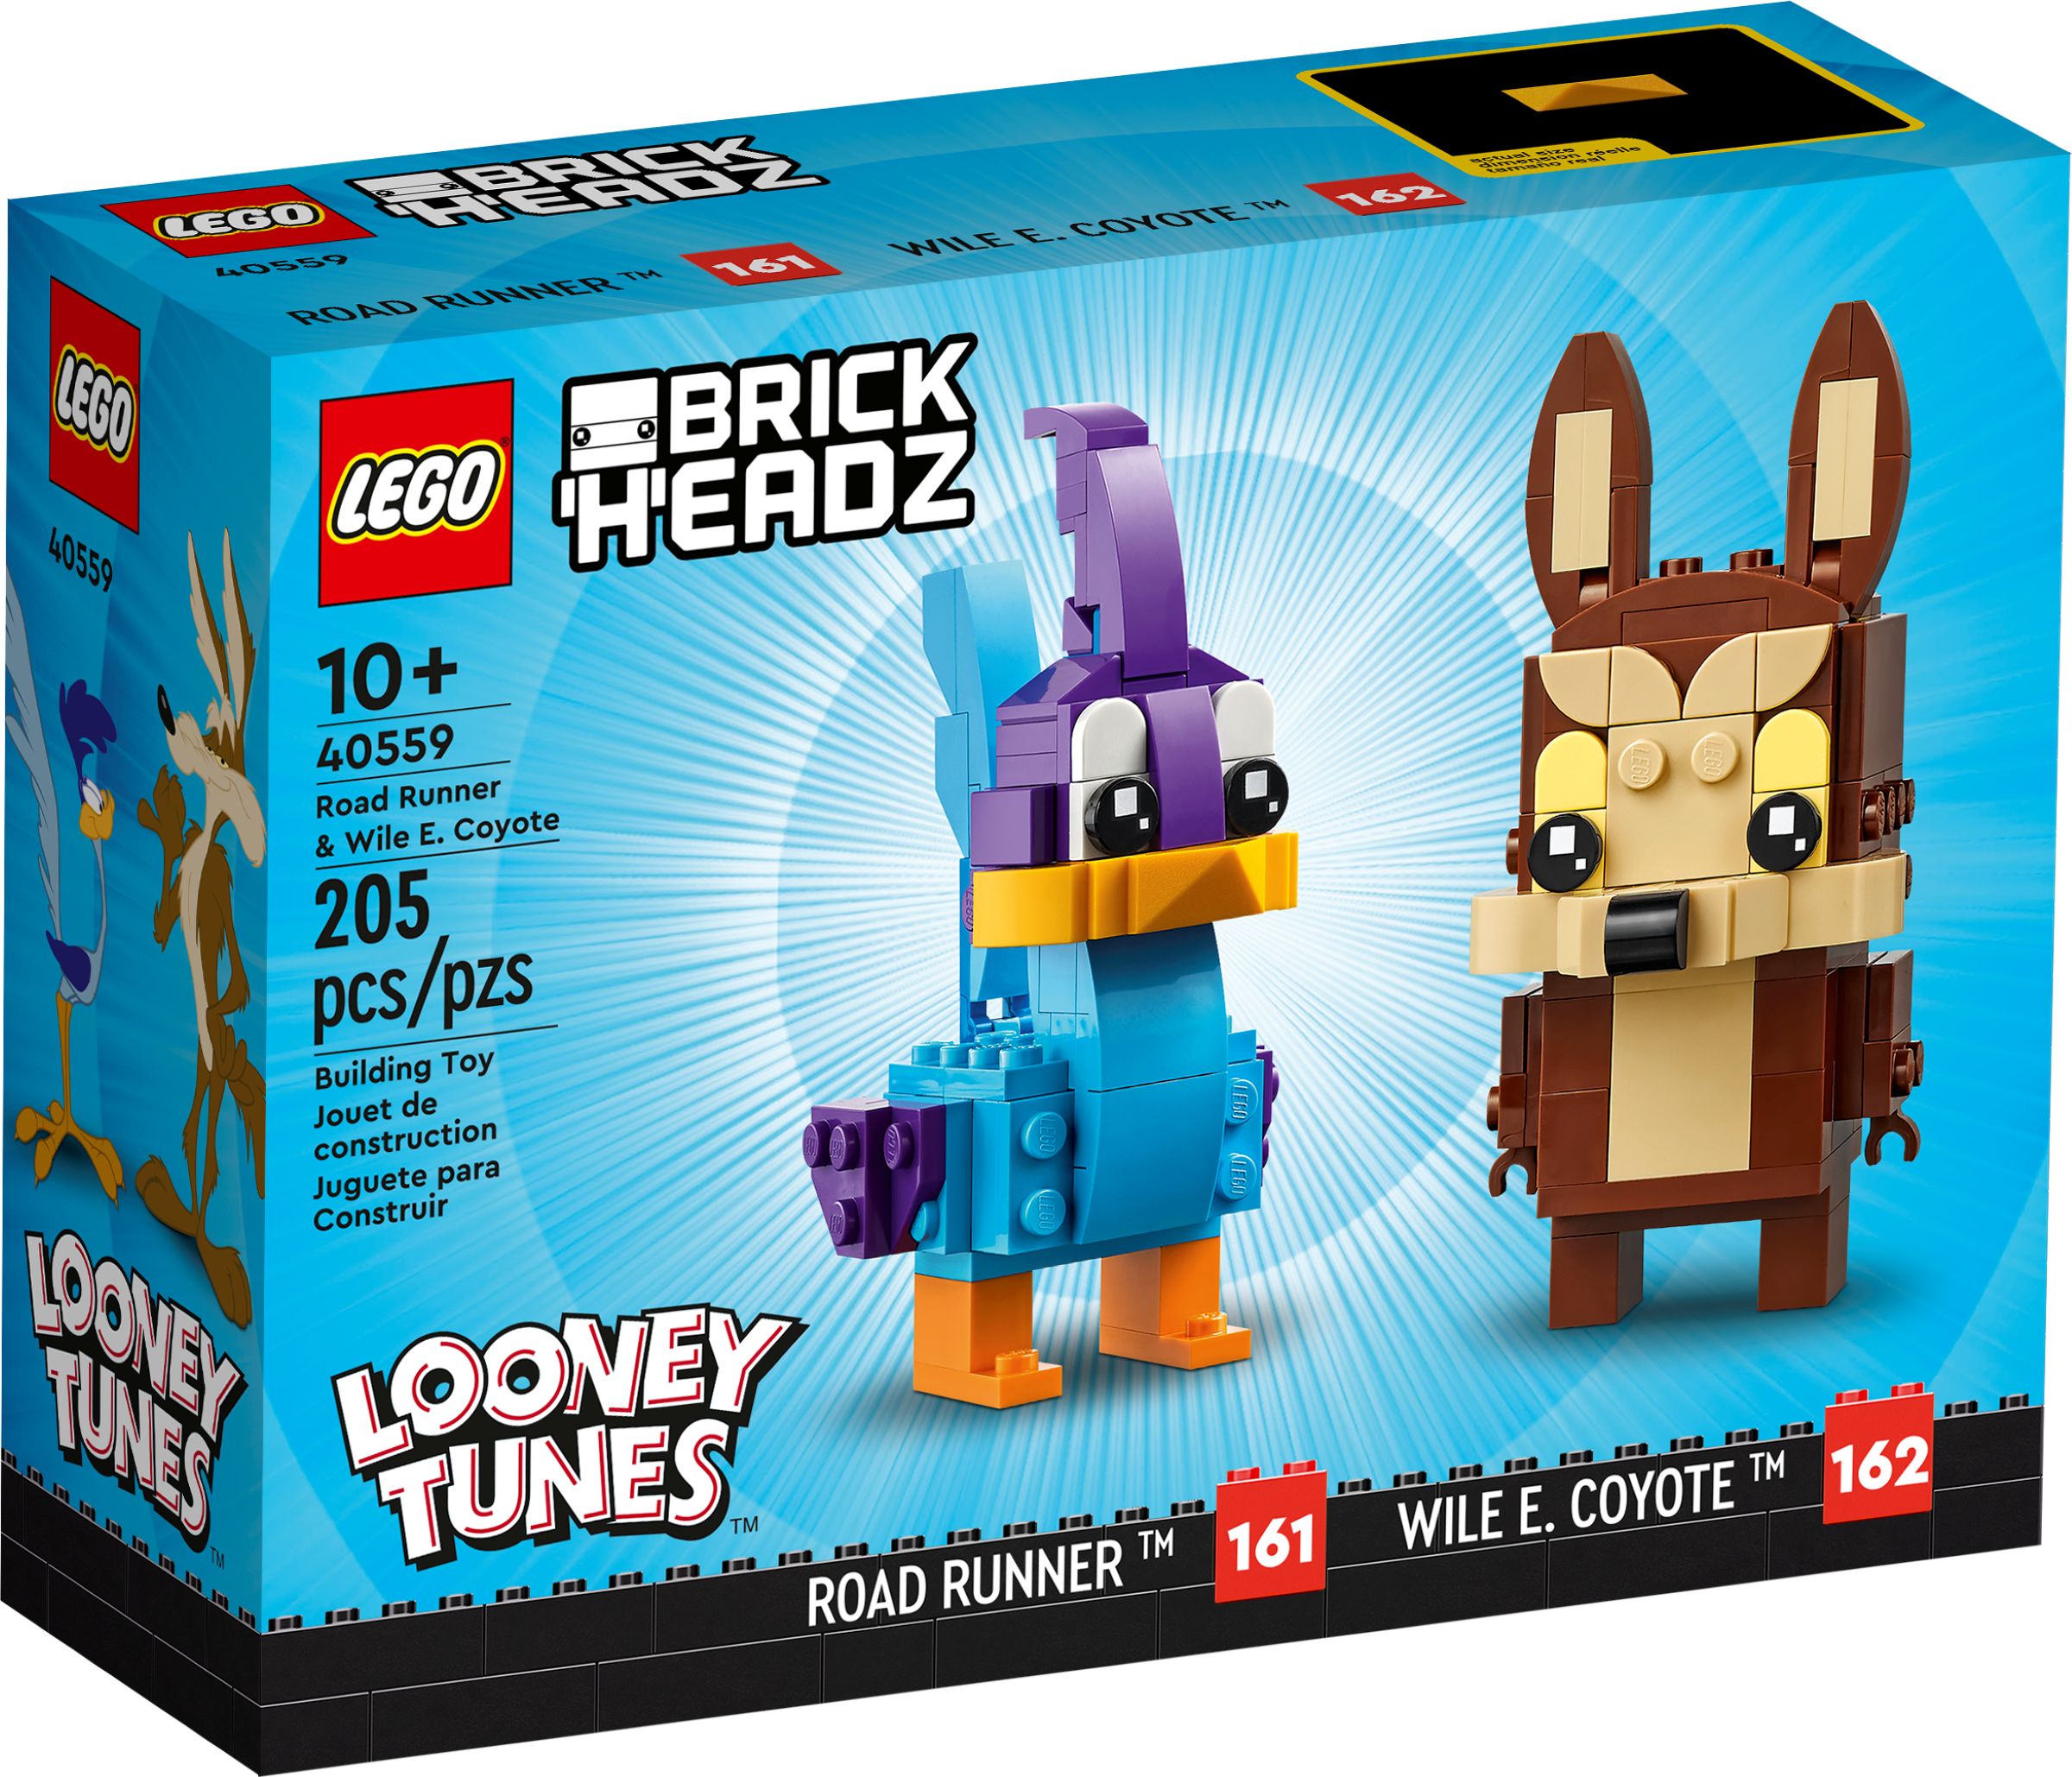 LEGO BrickHeadz 40559 Road Runner & Wile E. Coyote LEGO_40559_alt1.jpg